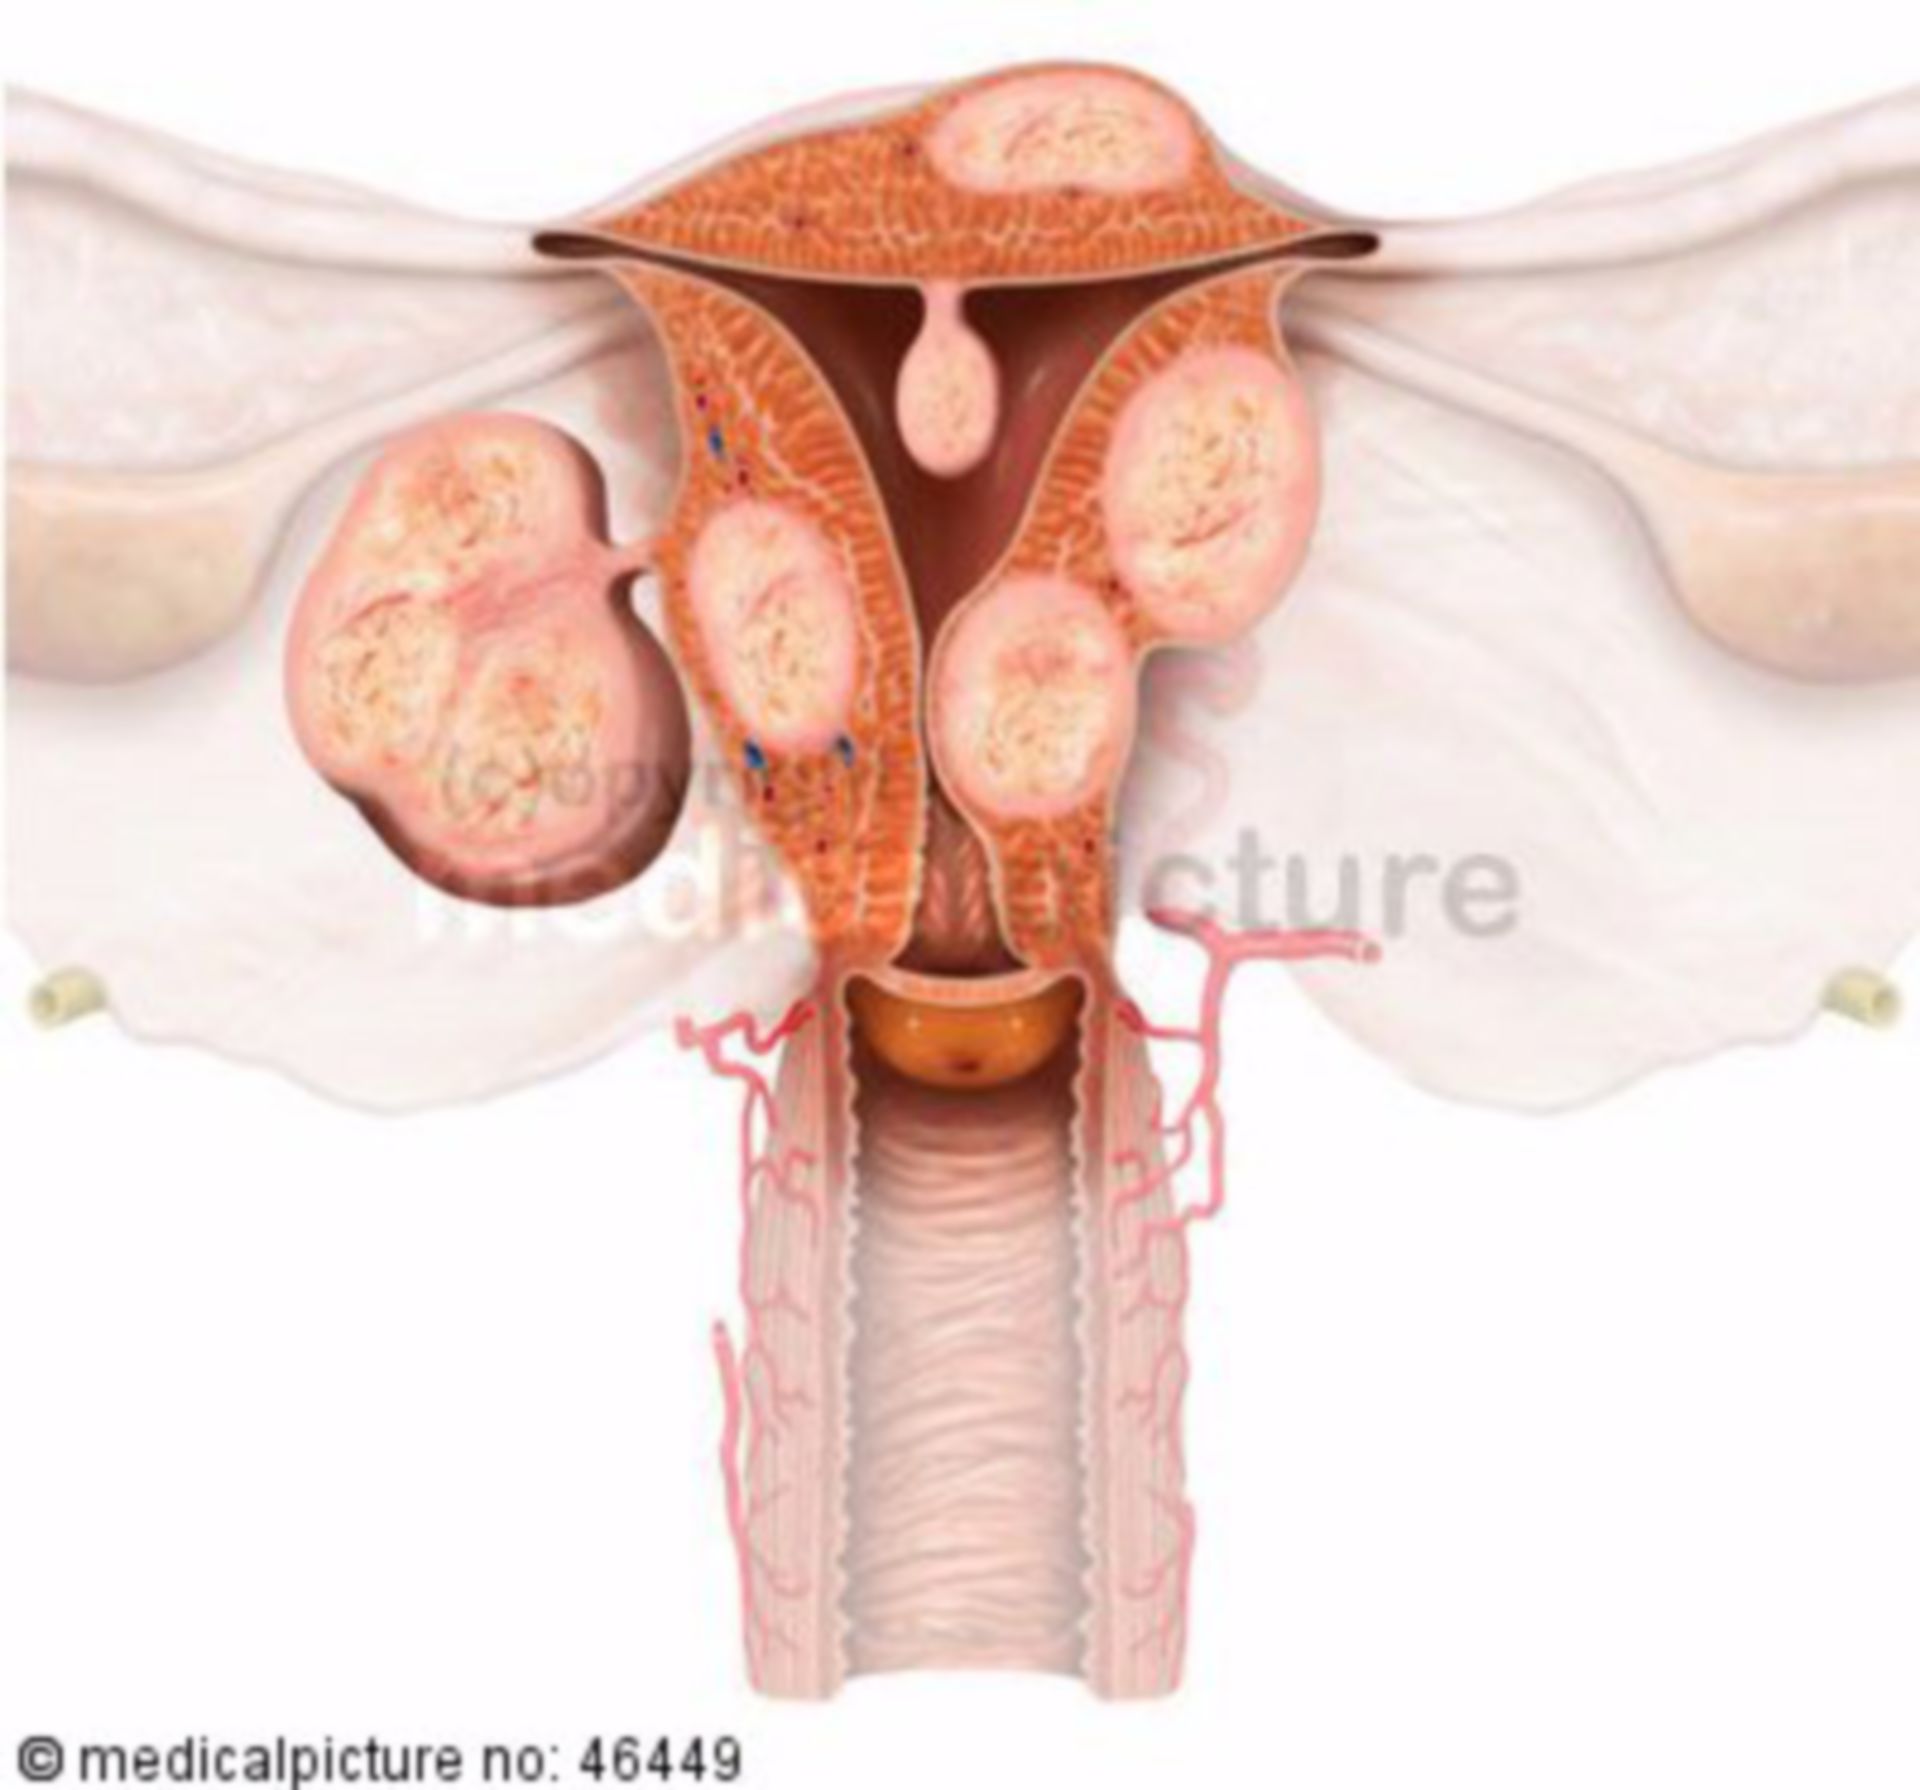 Leiomyoma of the uterus